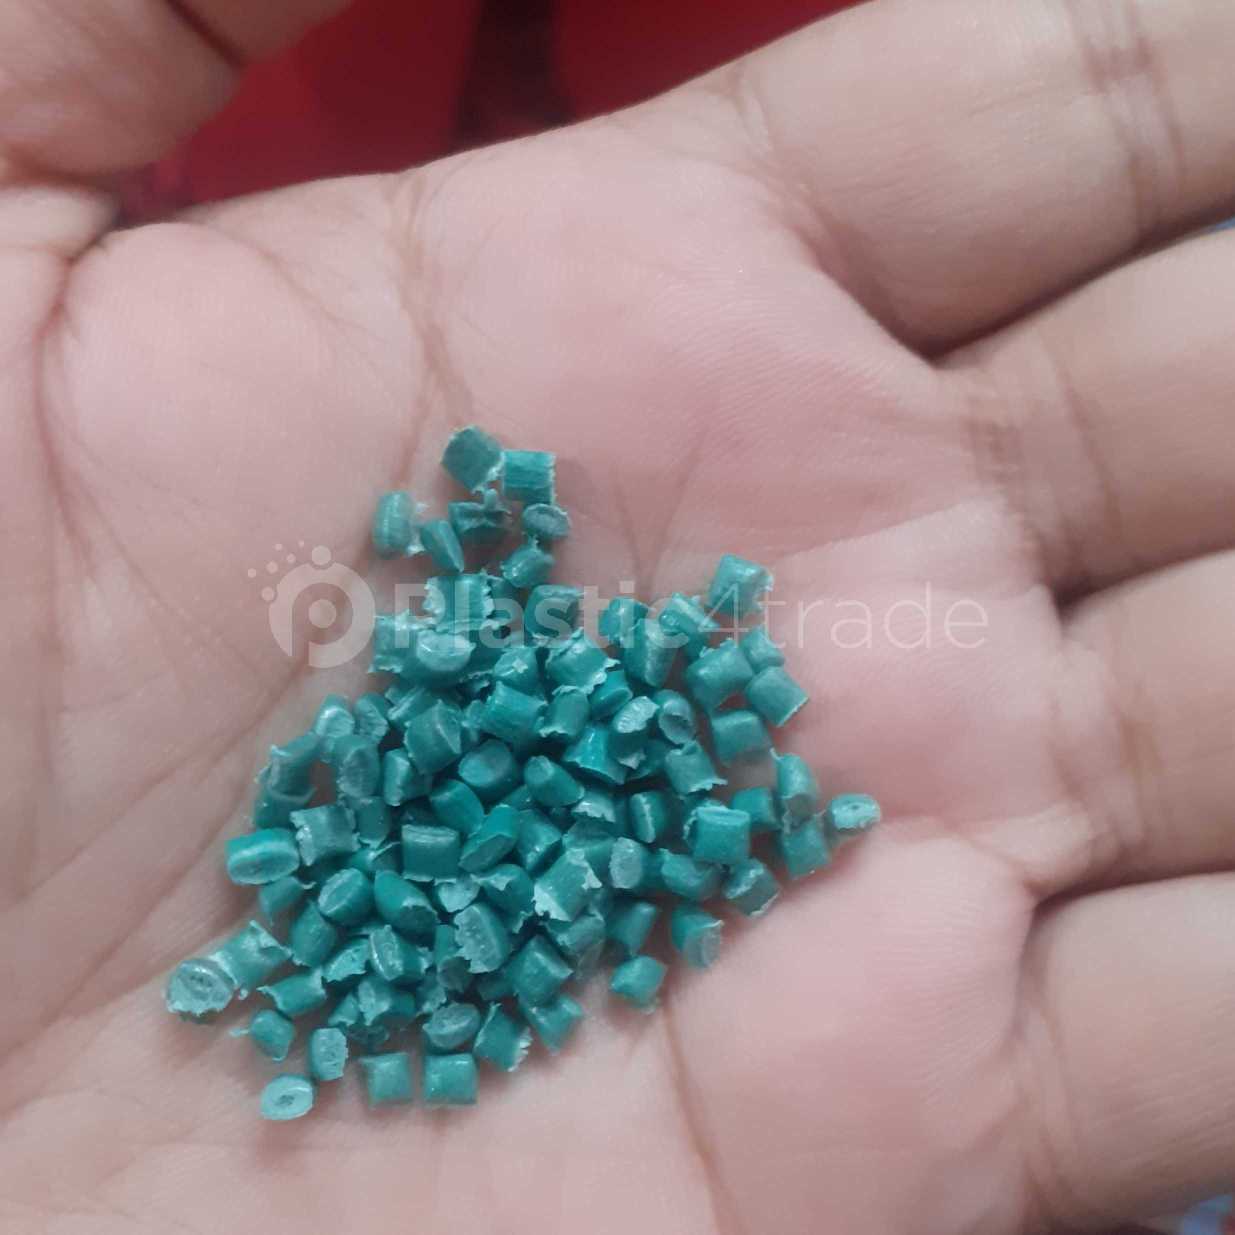 REPROCESSED  GRANULES LLDPE Reprocess Granule Blow uttar pradesh india Plastic4trade